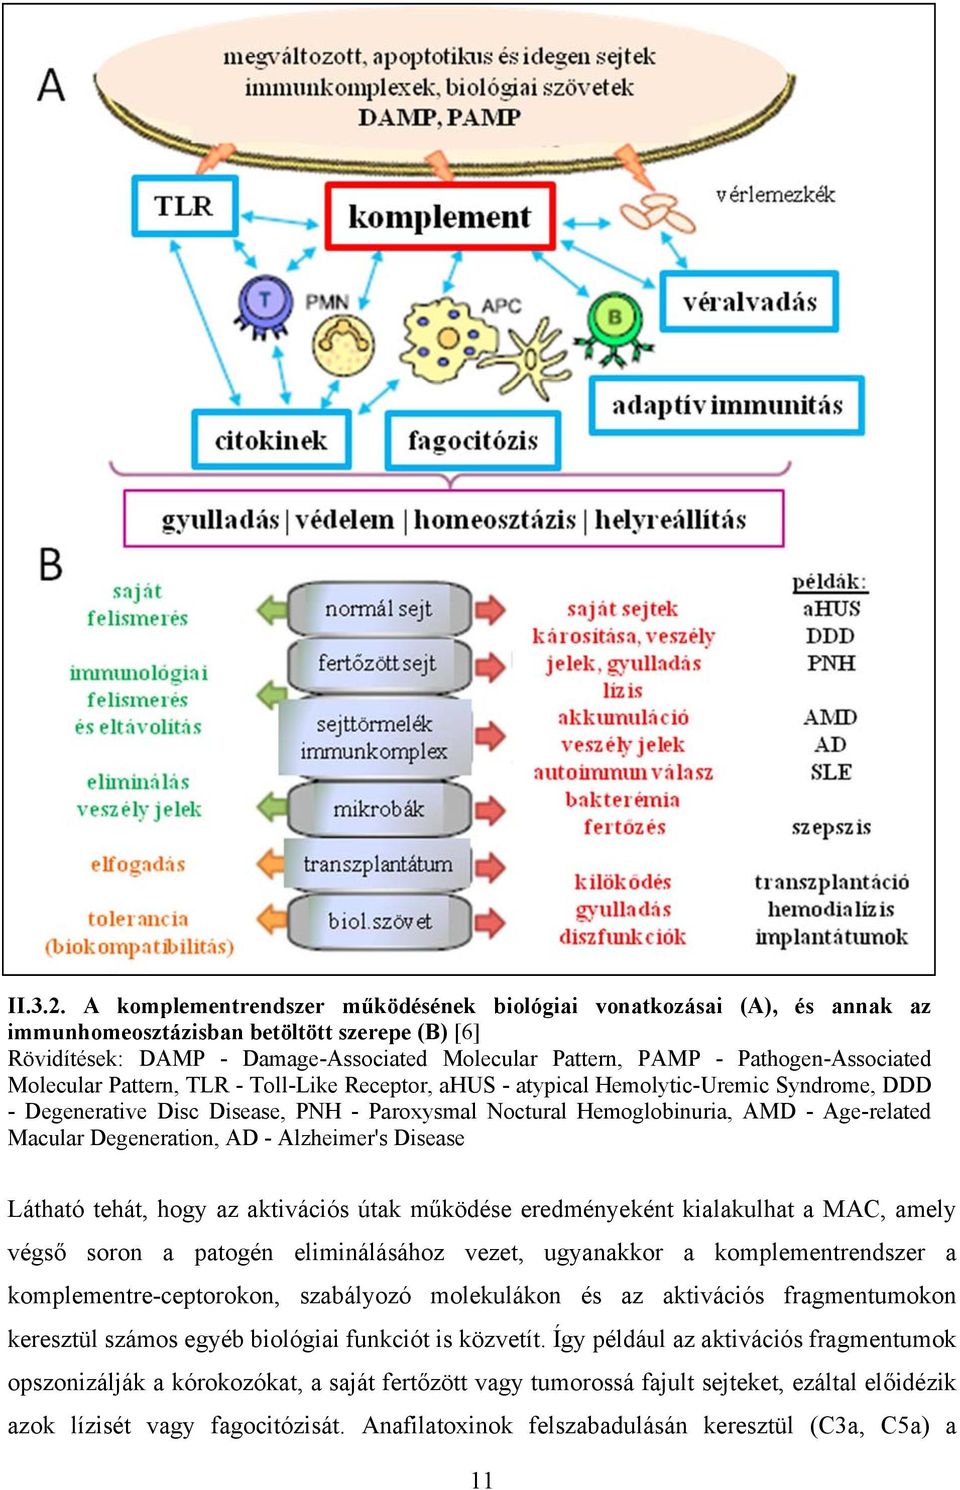 Pathogen-Associated Molecular Pattern, TLR - Toll-Like Receptor, ahus - atypical Hemolytic-Uremic Syndrome, DDD - Degenerative Disc Disease, PNH - Paroxysmal Noctural Hemoglobinuria, AMD -